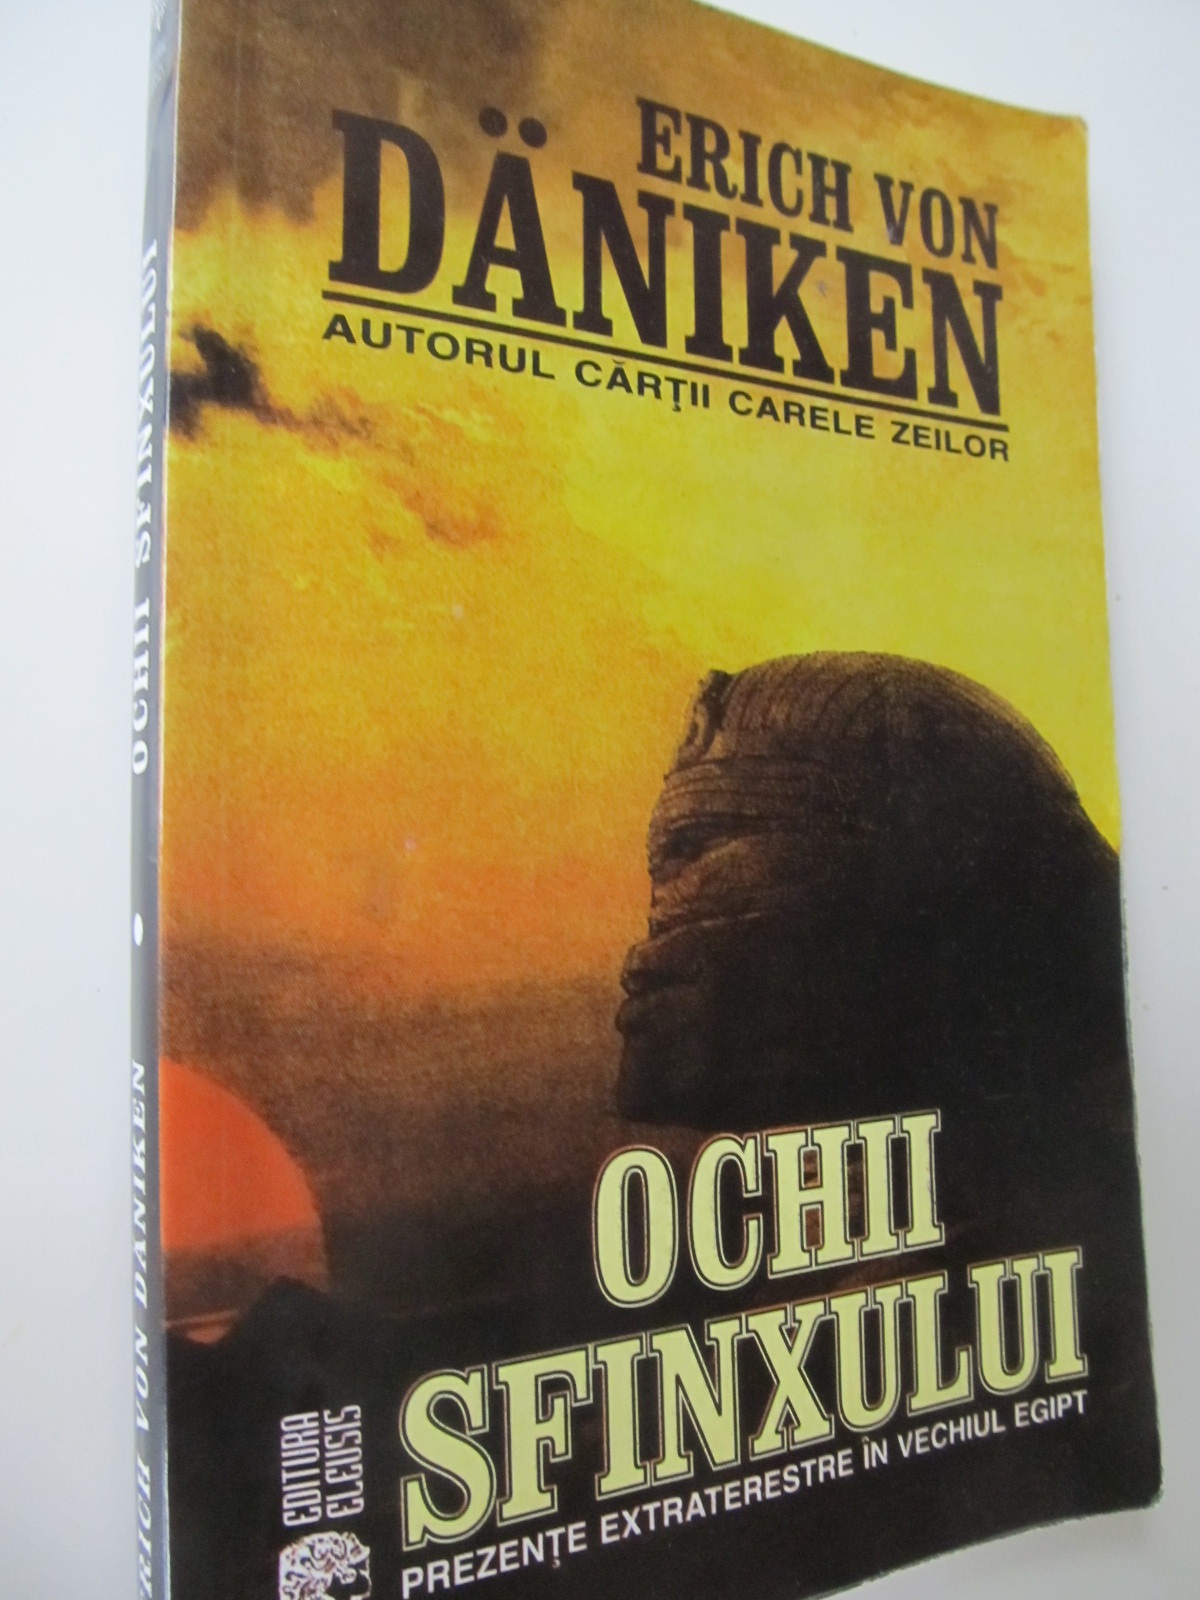 Ochii Sfinxului - Prezente extraterestre in vechiul Egipt - Erich von Daniken | Detalii carte